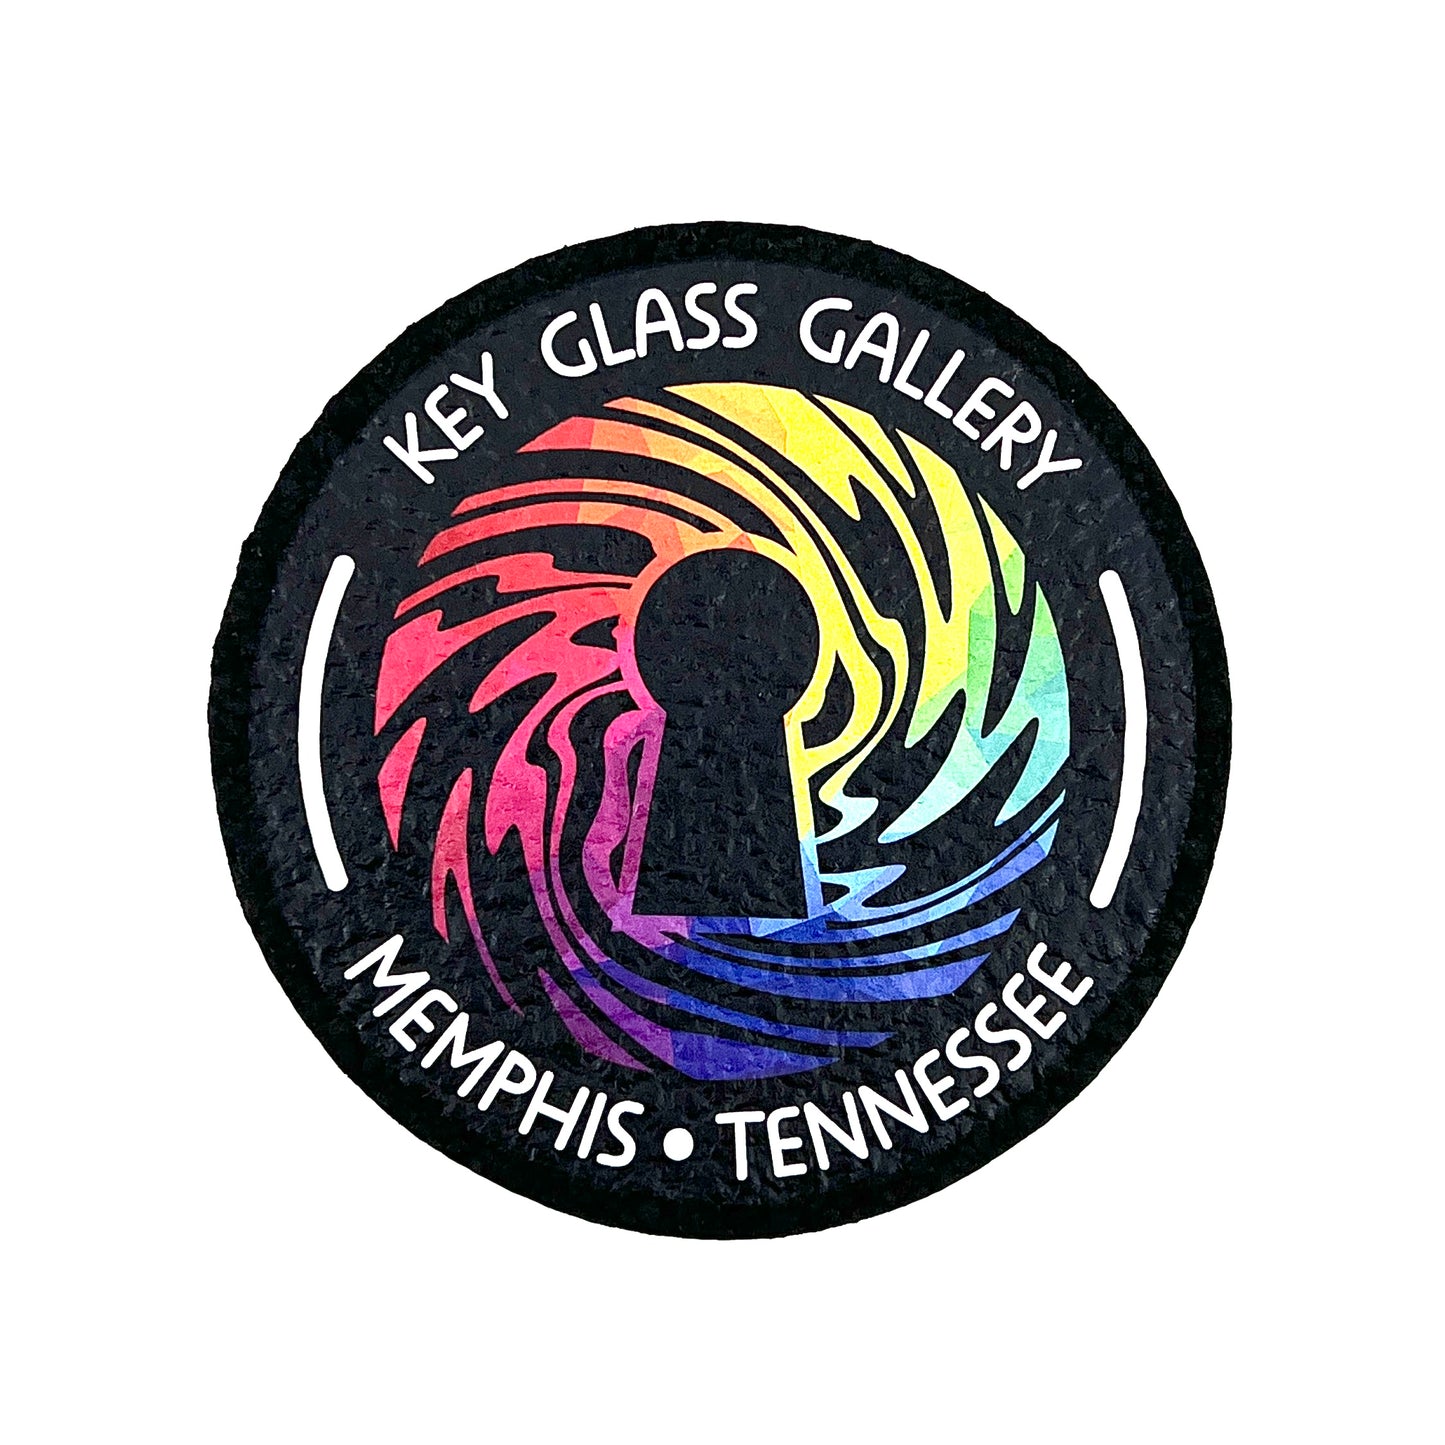 Key Glass Gallery 5” round Moodmat